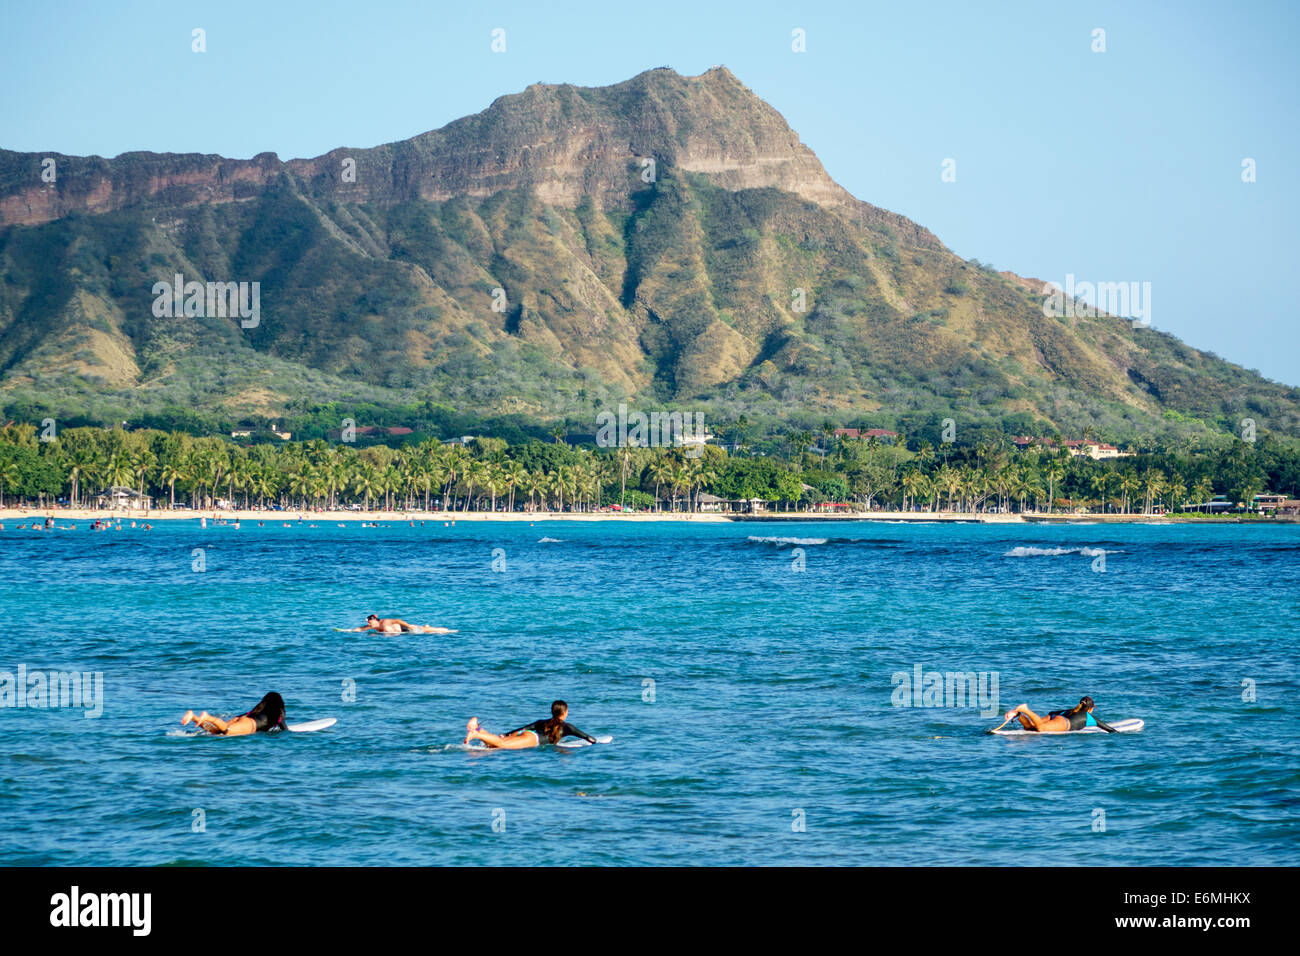 Honolulu Waikiki Beach Hawaii, Hawaiian, Oahu, Océan Pacifique, Waikiki Bay, Diamond Head Crater éteint volcan femmes surfeurs Banque D'Images